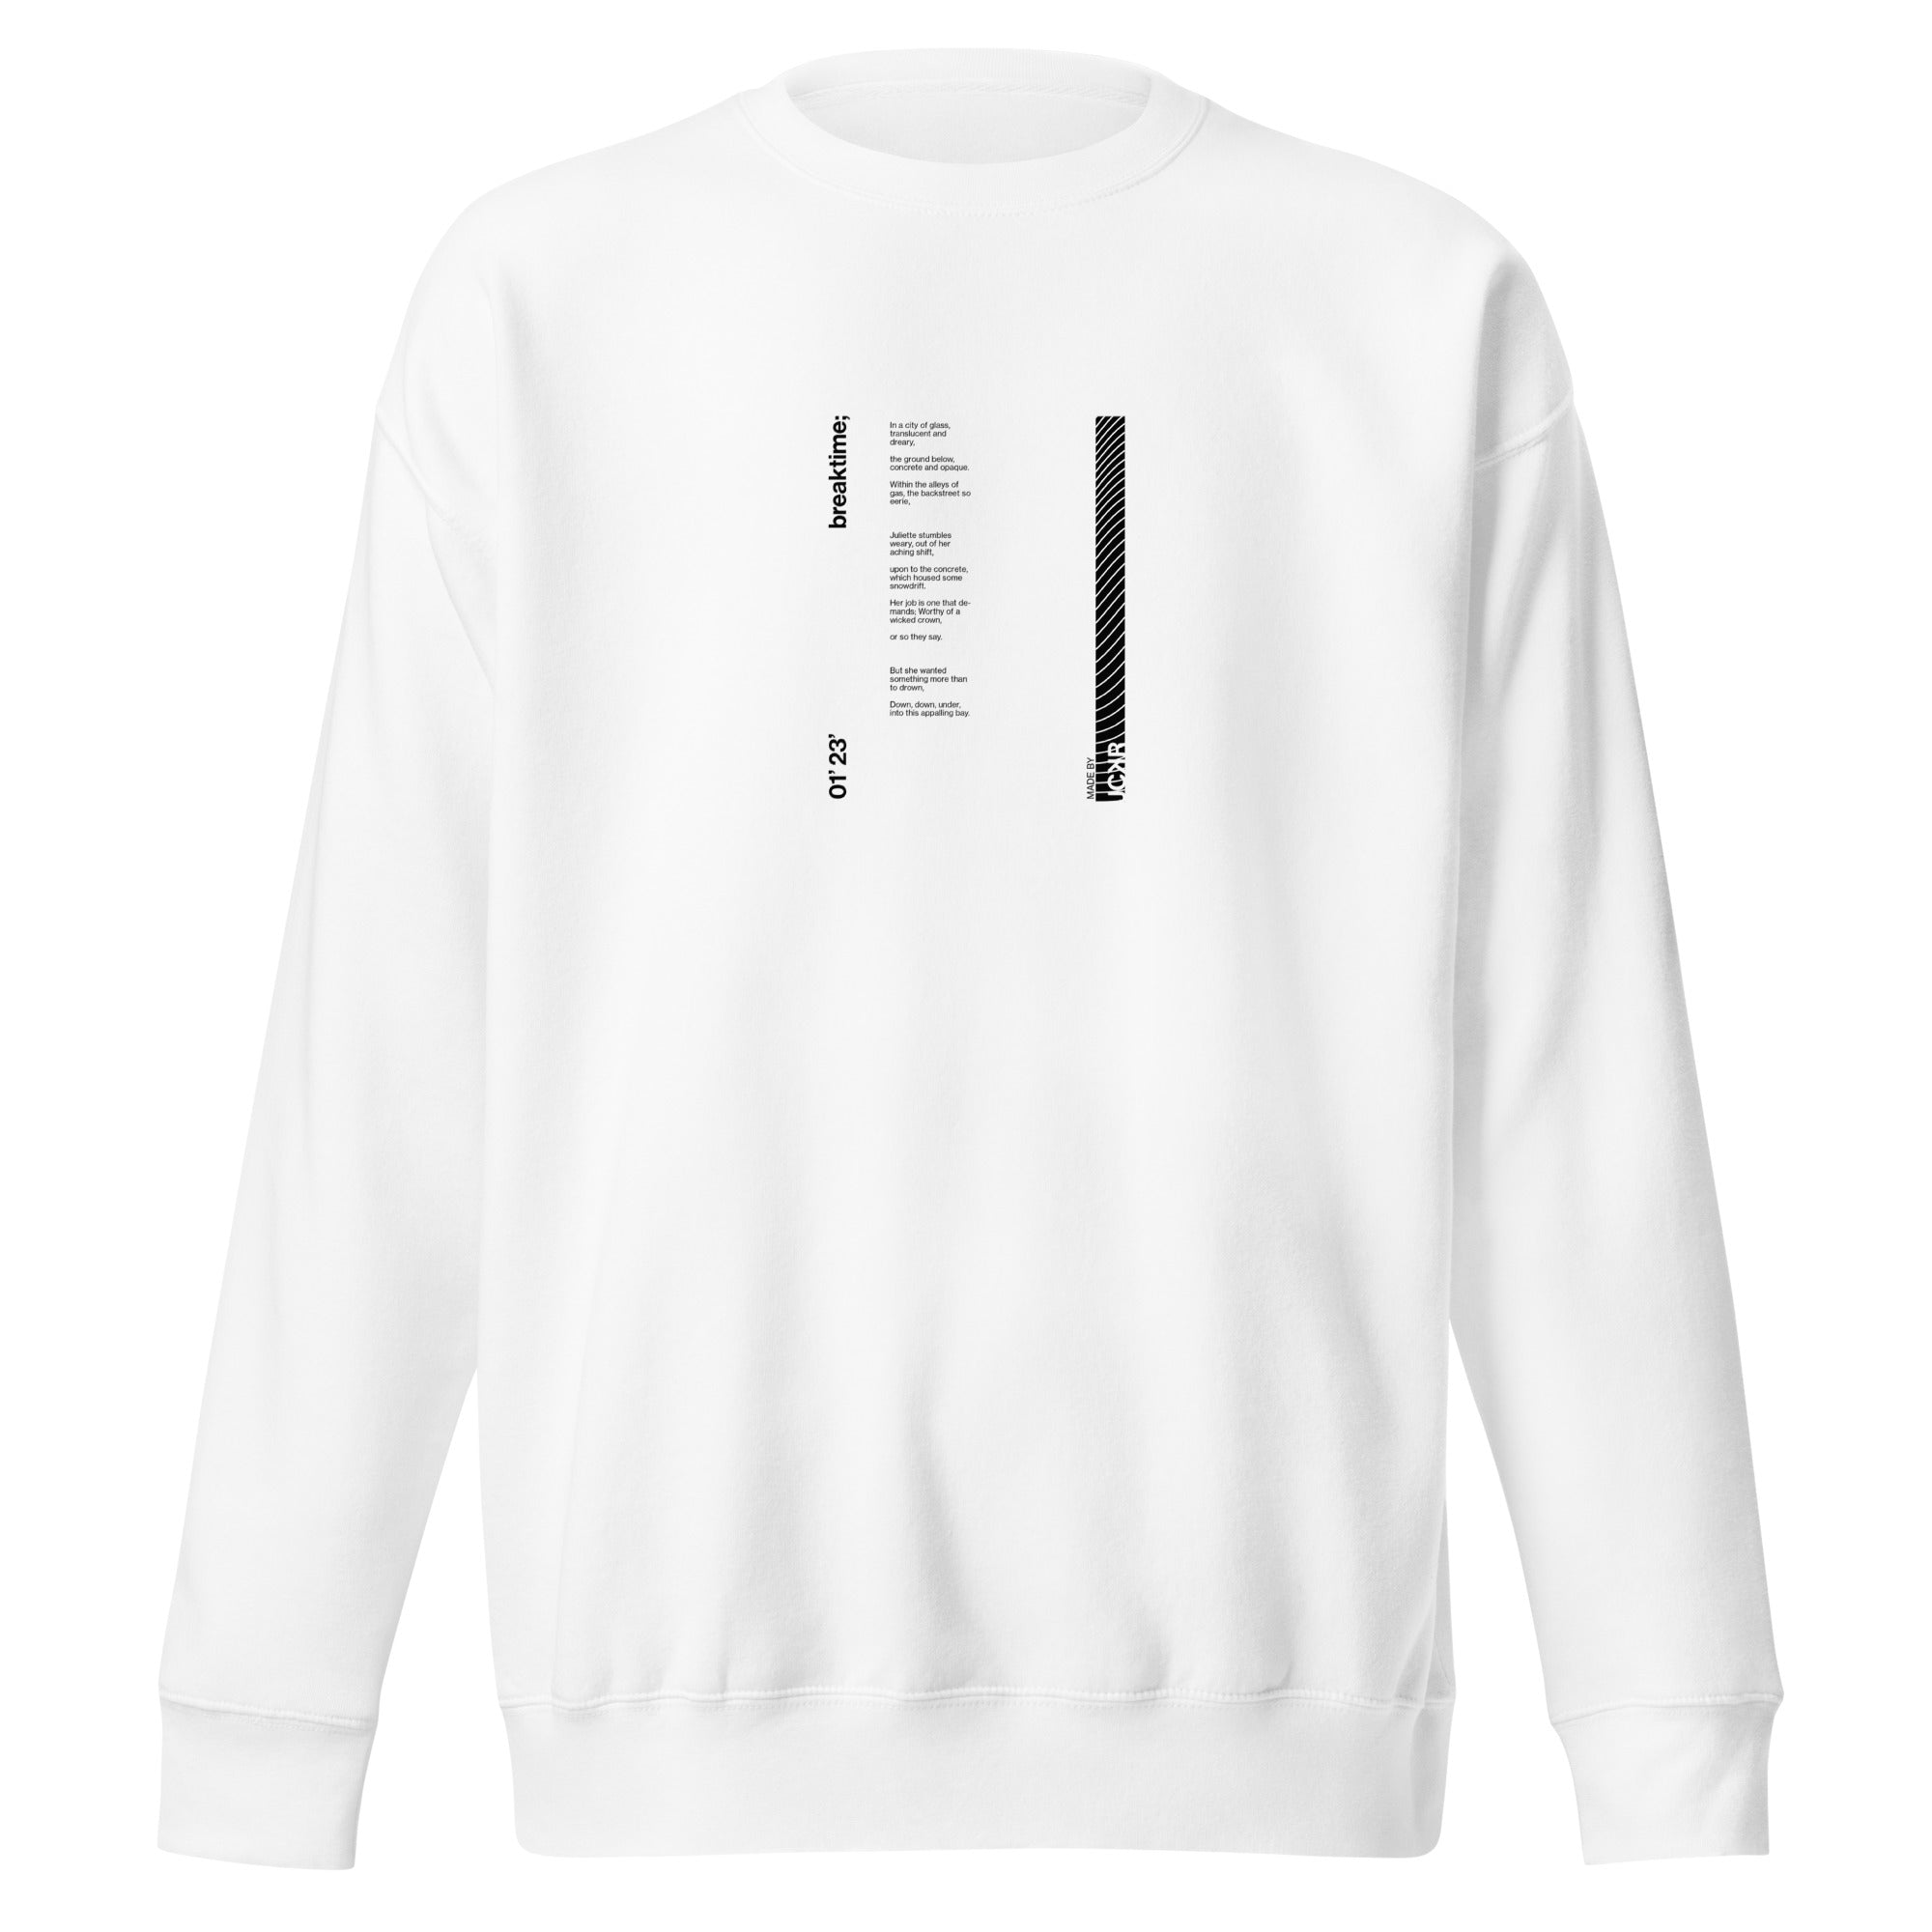 Breaktime • anime sweatshirt - Jackler - anime-inspired streetwear - anime clothing